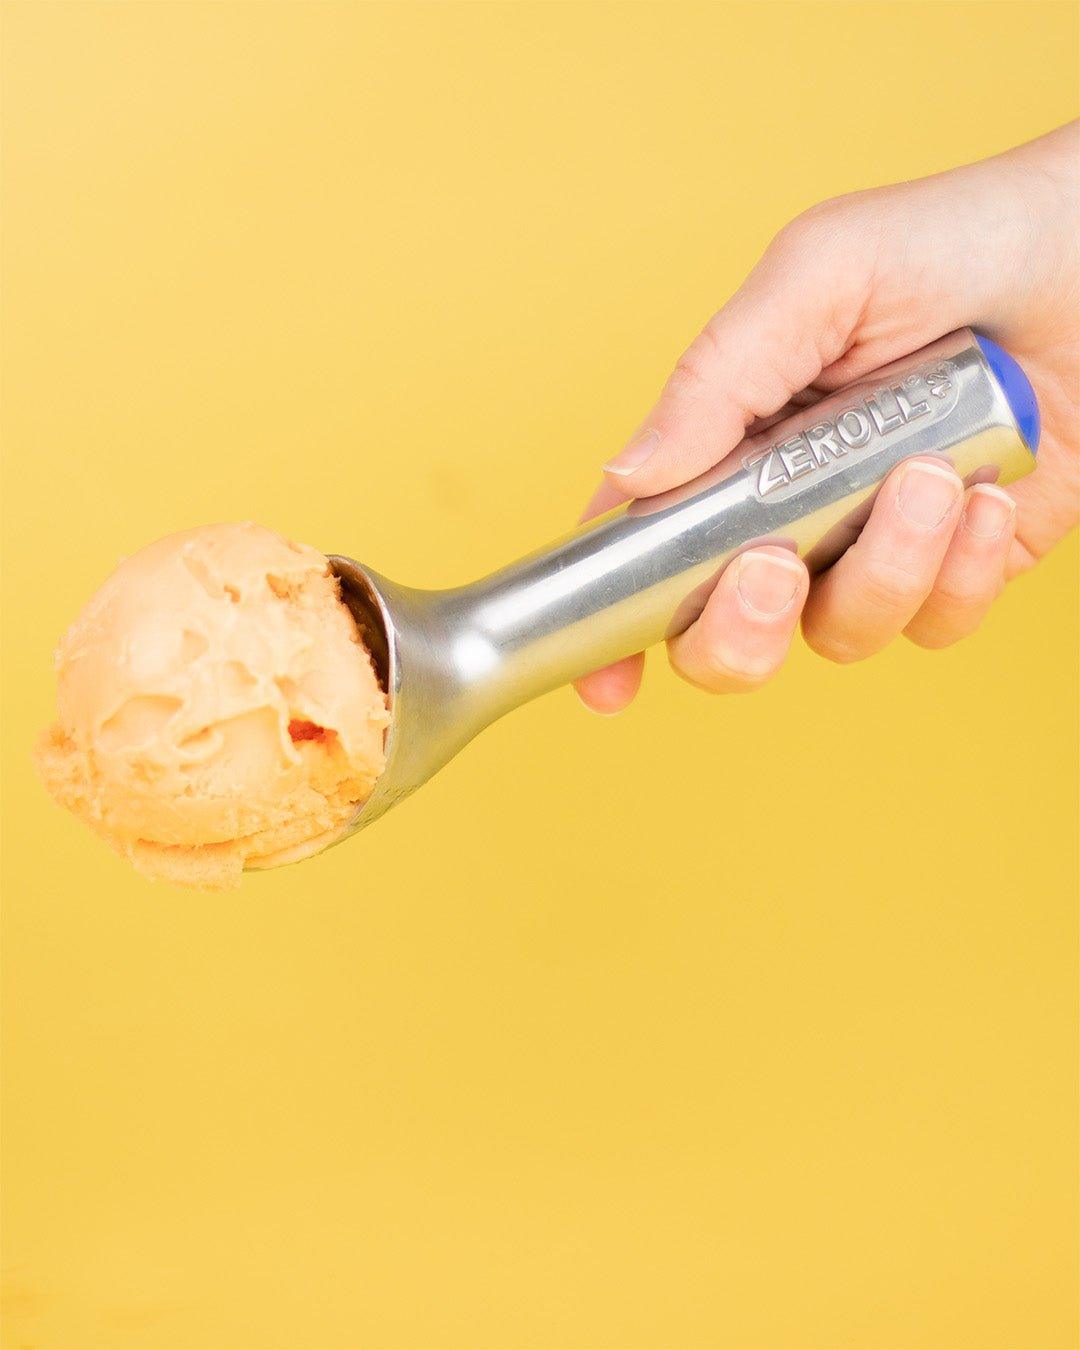 ZeRoll Ice Cream Scooper Model 1012 (3 oz) (Pack of 3) - Frozen Dessert Supplies 50212